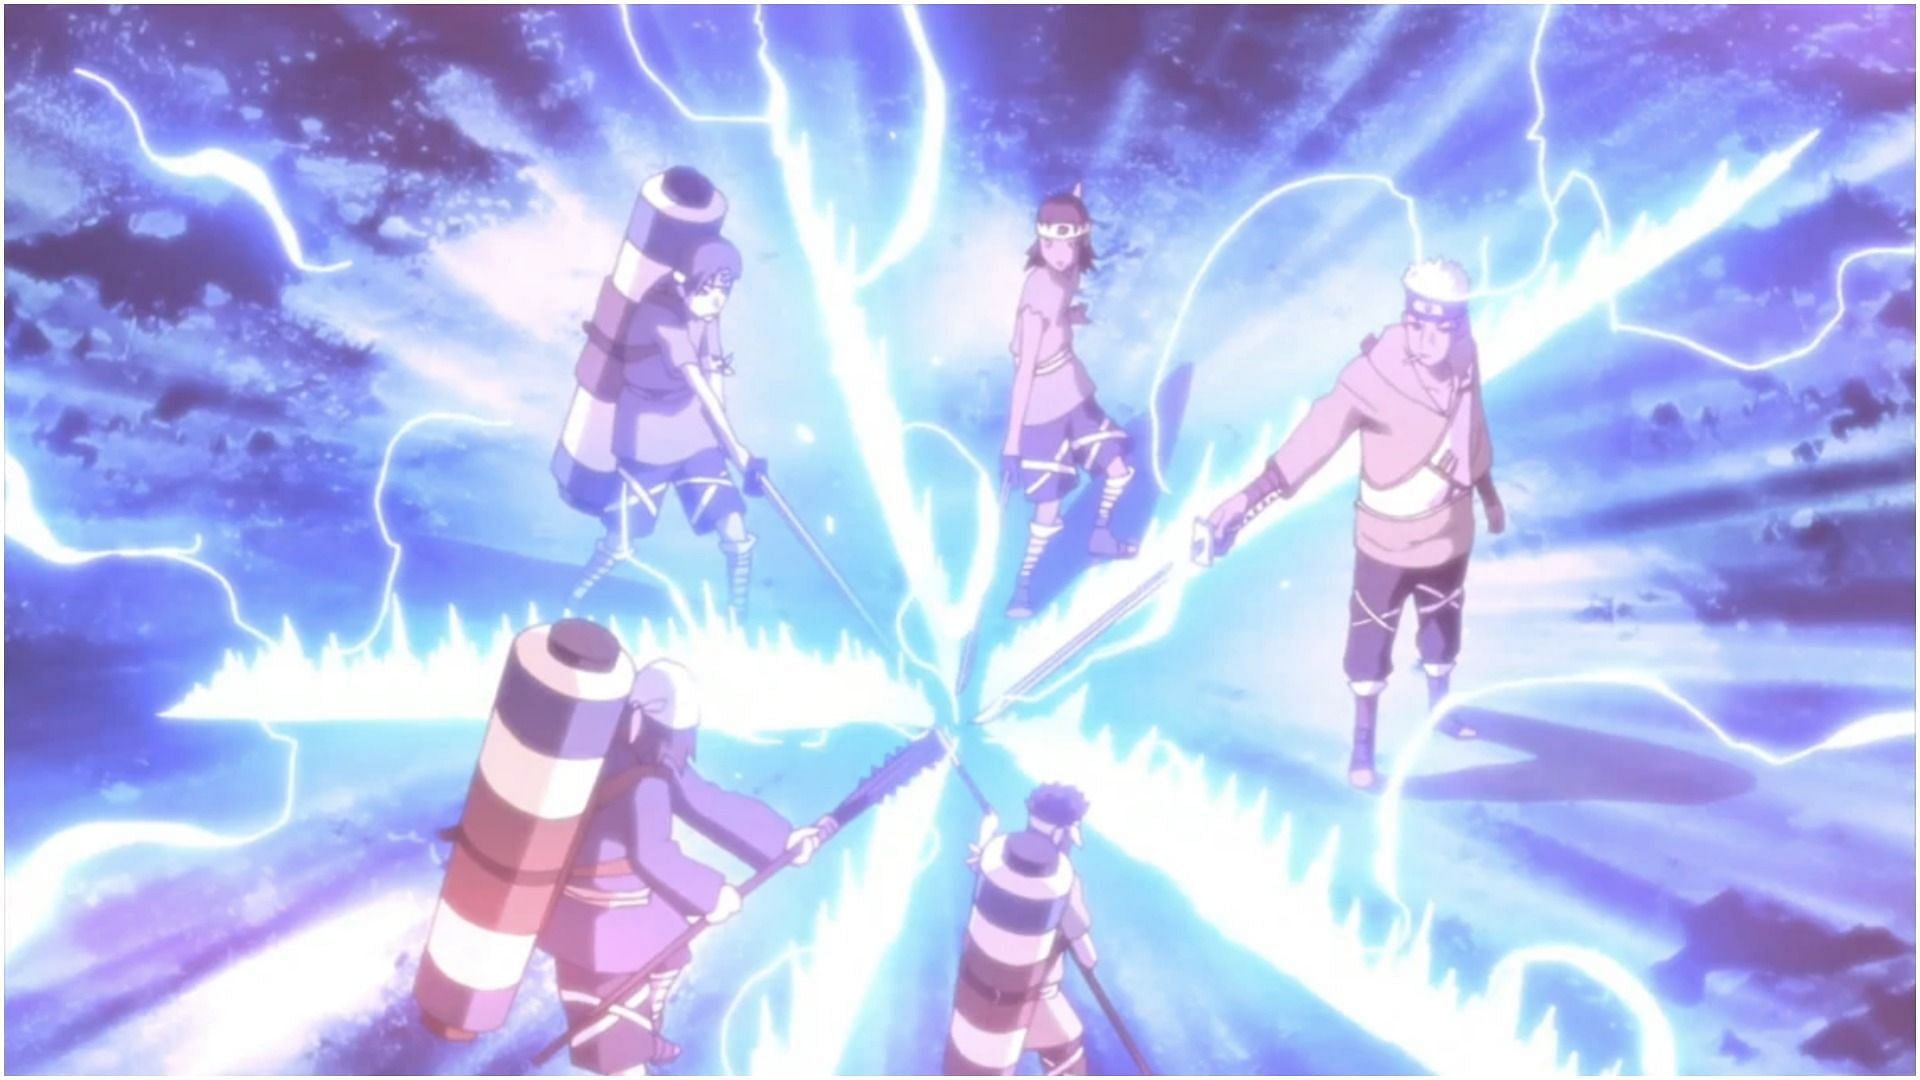 Lightning Release Co-Operation: Thunder Bomb as seen in Naruto (Image via Spotskeeda)